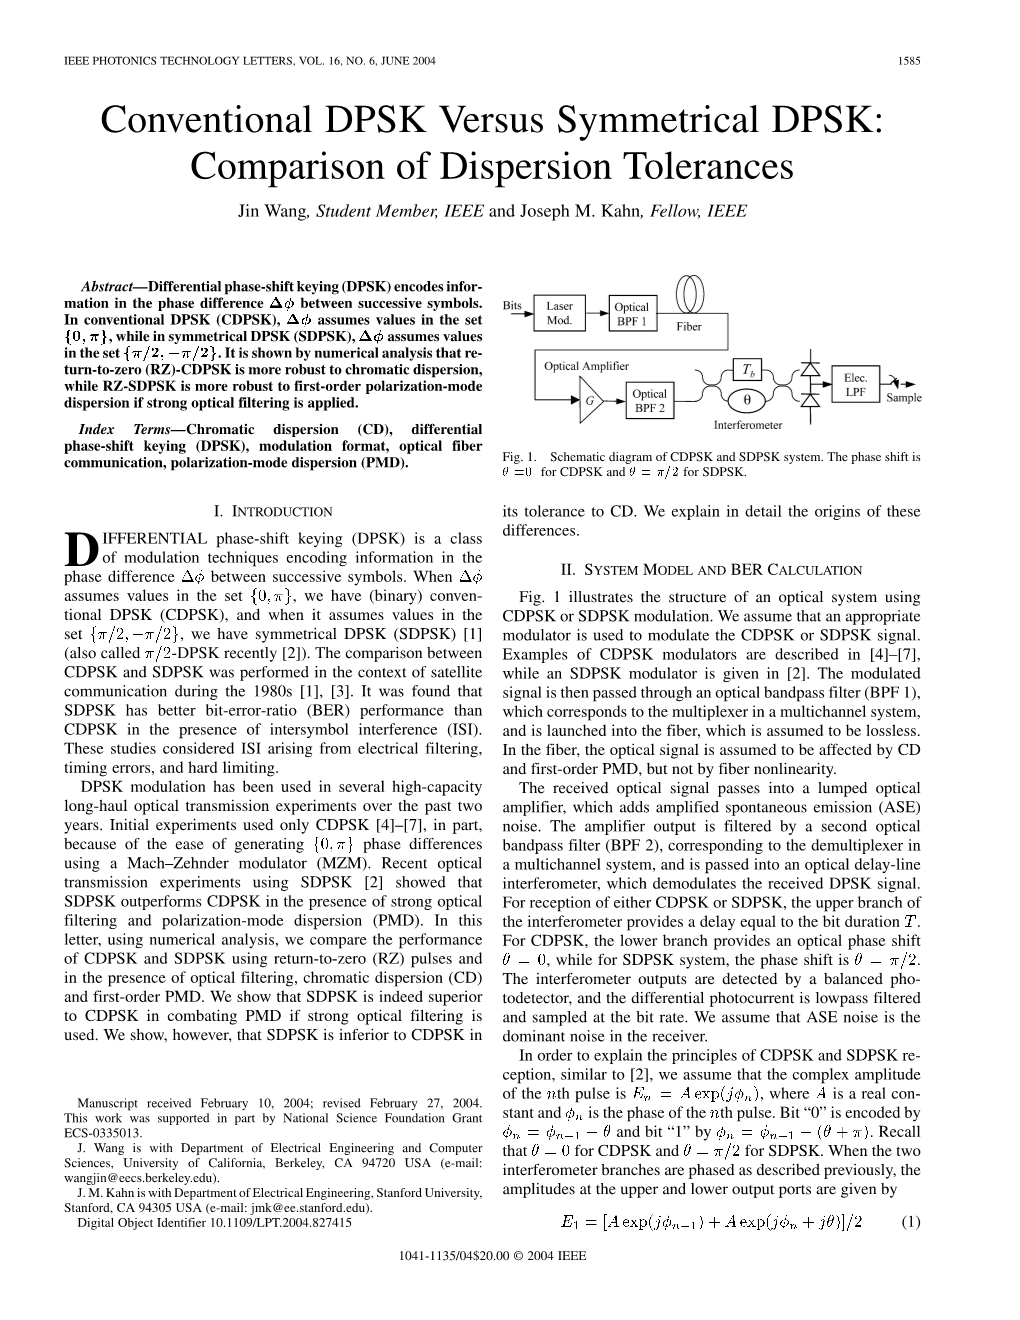 Conventional DPSK Versus Symmetrical DPSK: Comparison of Dispersion Tolerances Jin Wang, Student Member, IEEE and Joseph M